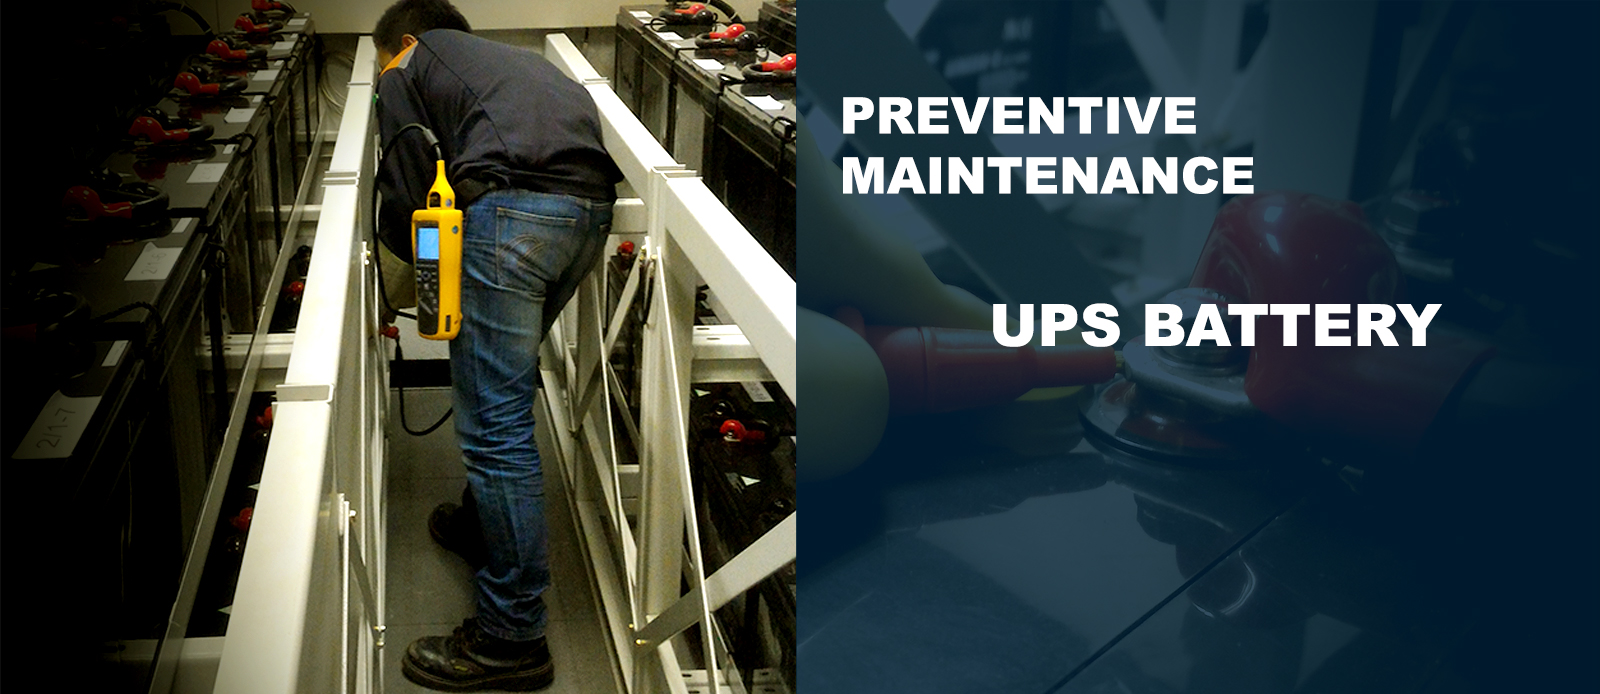 Preventive Maintenance of UPS Battery